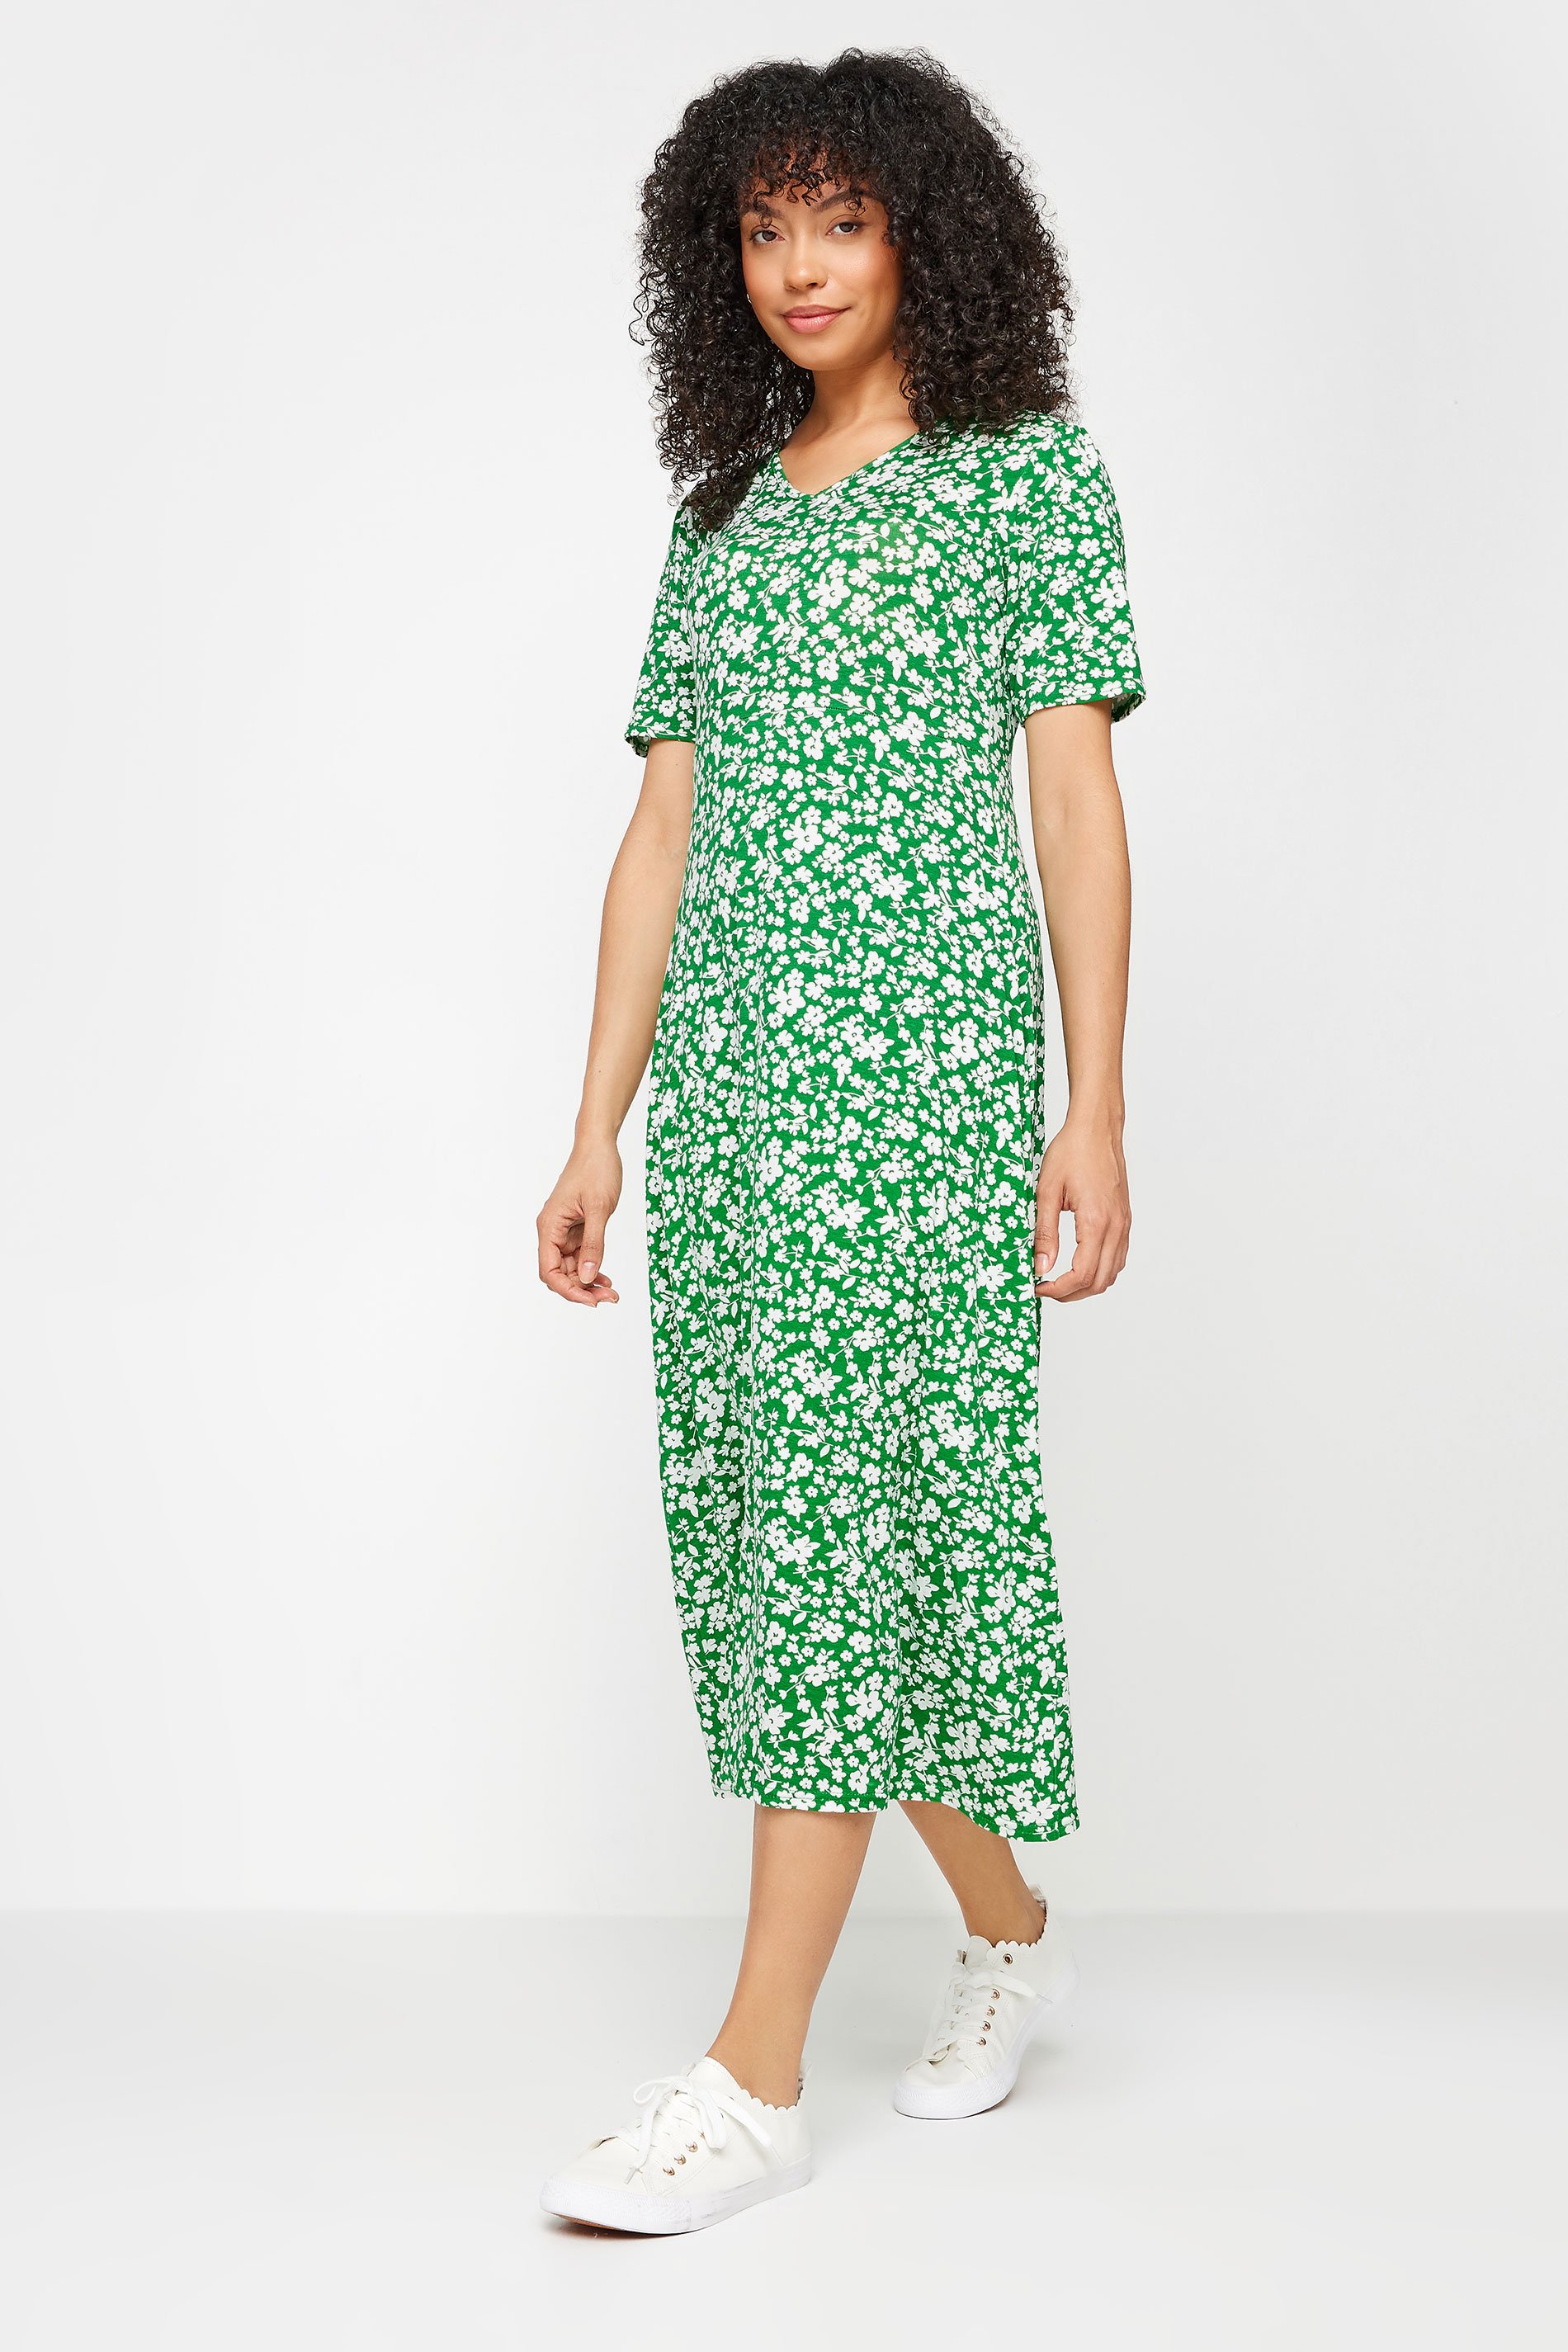 M&Co Green Ditsy Floral Print V-Neck Dress | M&Co 2